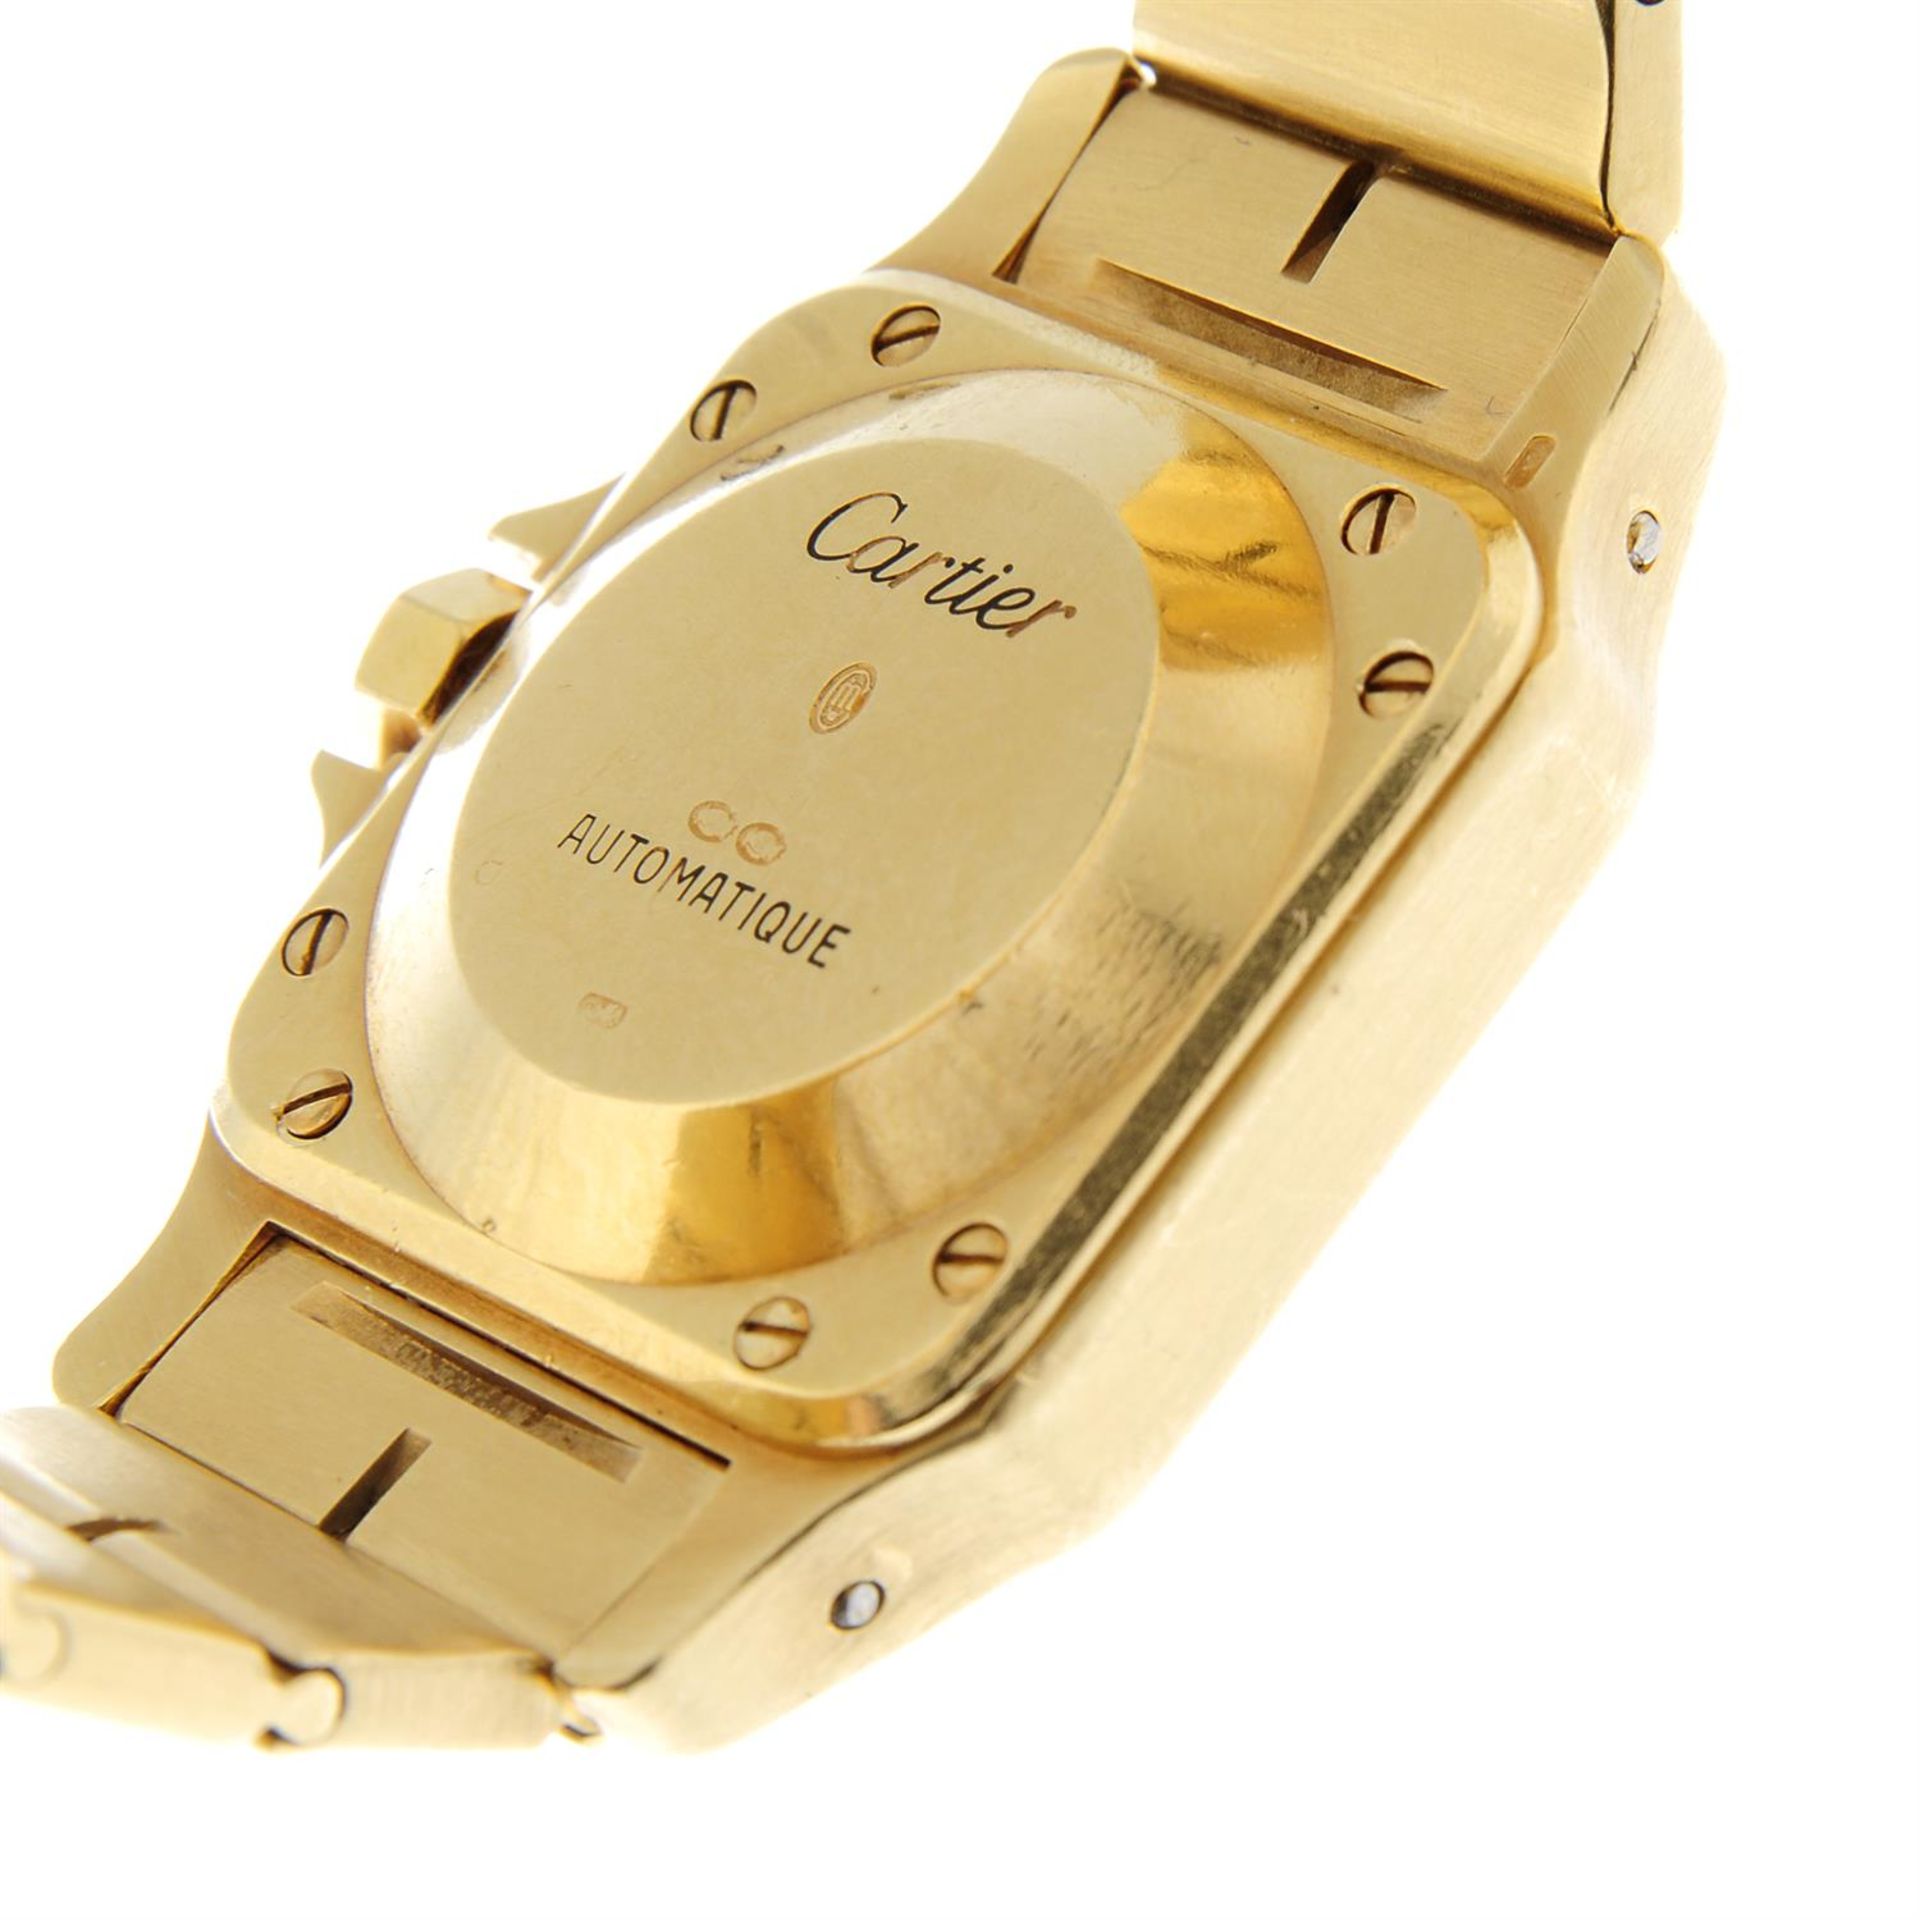 CARTIER - a yellow metal Santos bracelet watch. 24mm. - Image 2 of 4